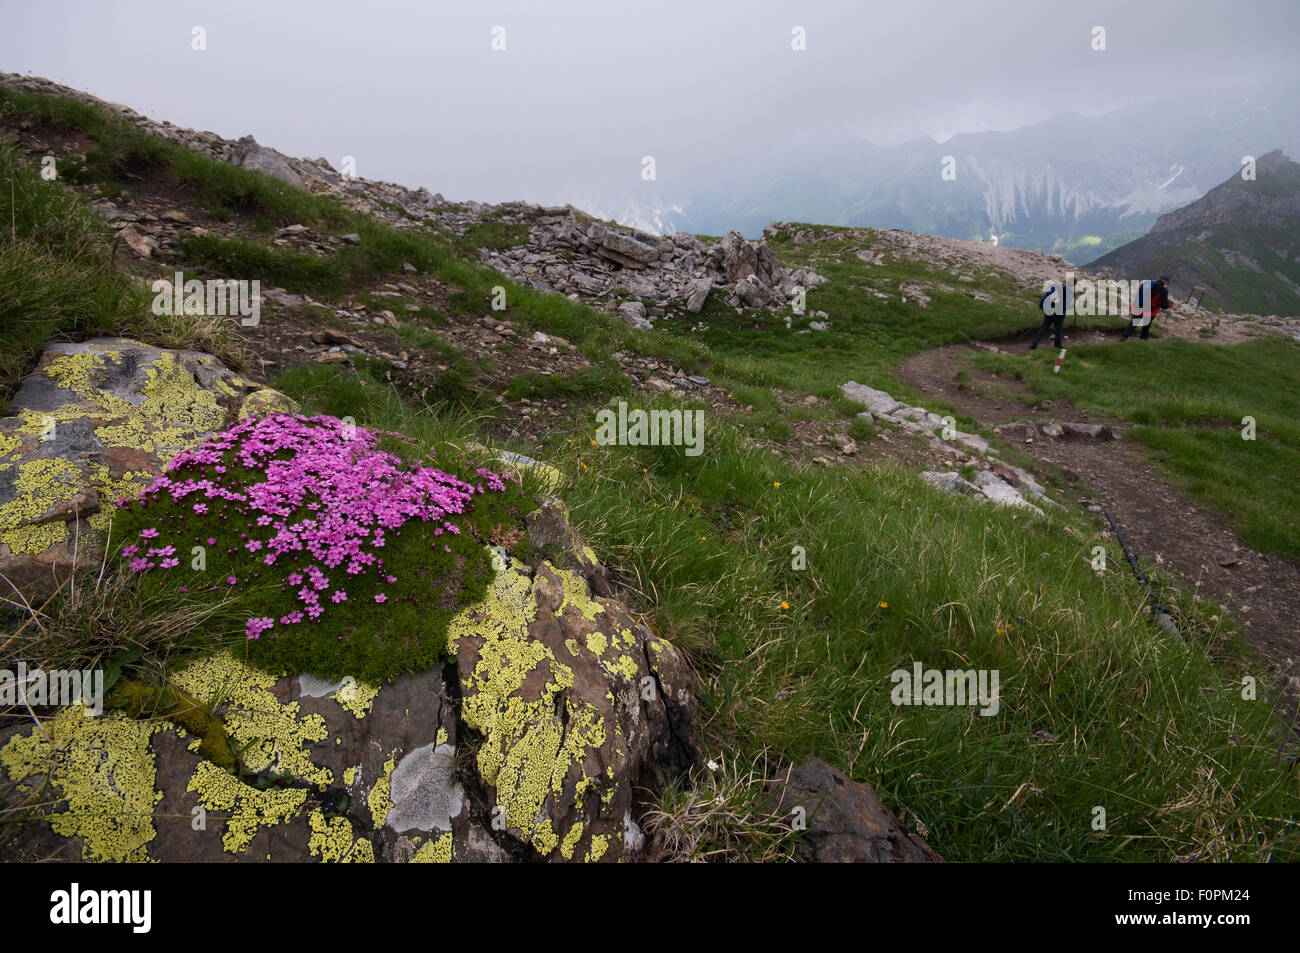 Moss campion (Silene acaulis) in flower on a rock, in alpine landscape with two hikers in distance, Liechtenstein, June 2009 Stock Photo